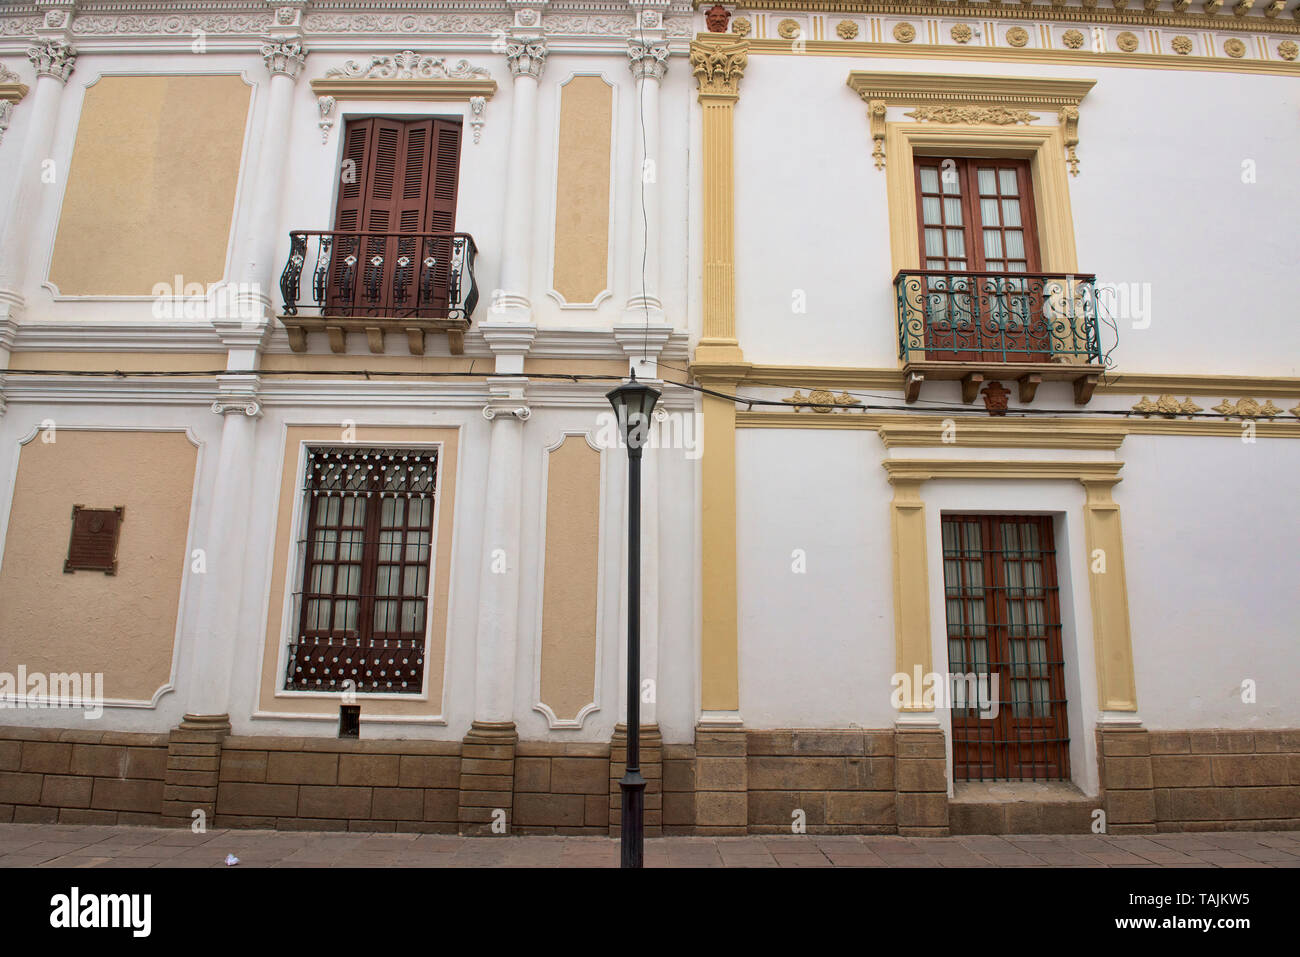 Architecture coloniale espagnole en la Ciudad Blanca (La ville blanche), Sucre, Bolivie Banque D'Images